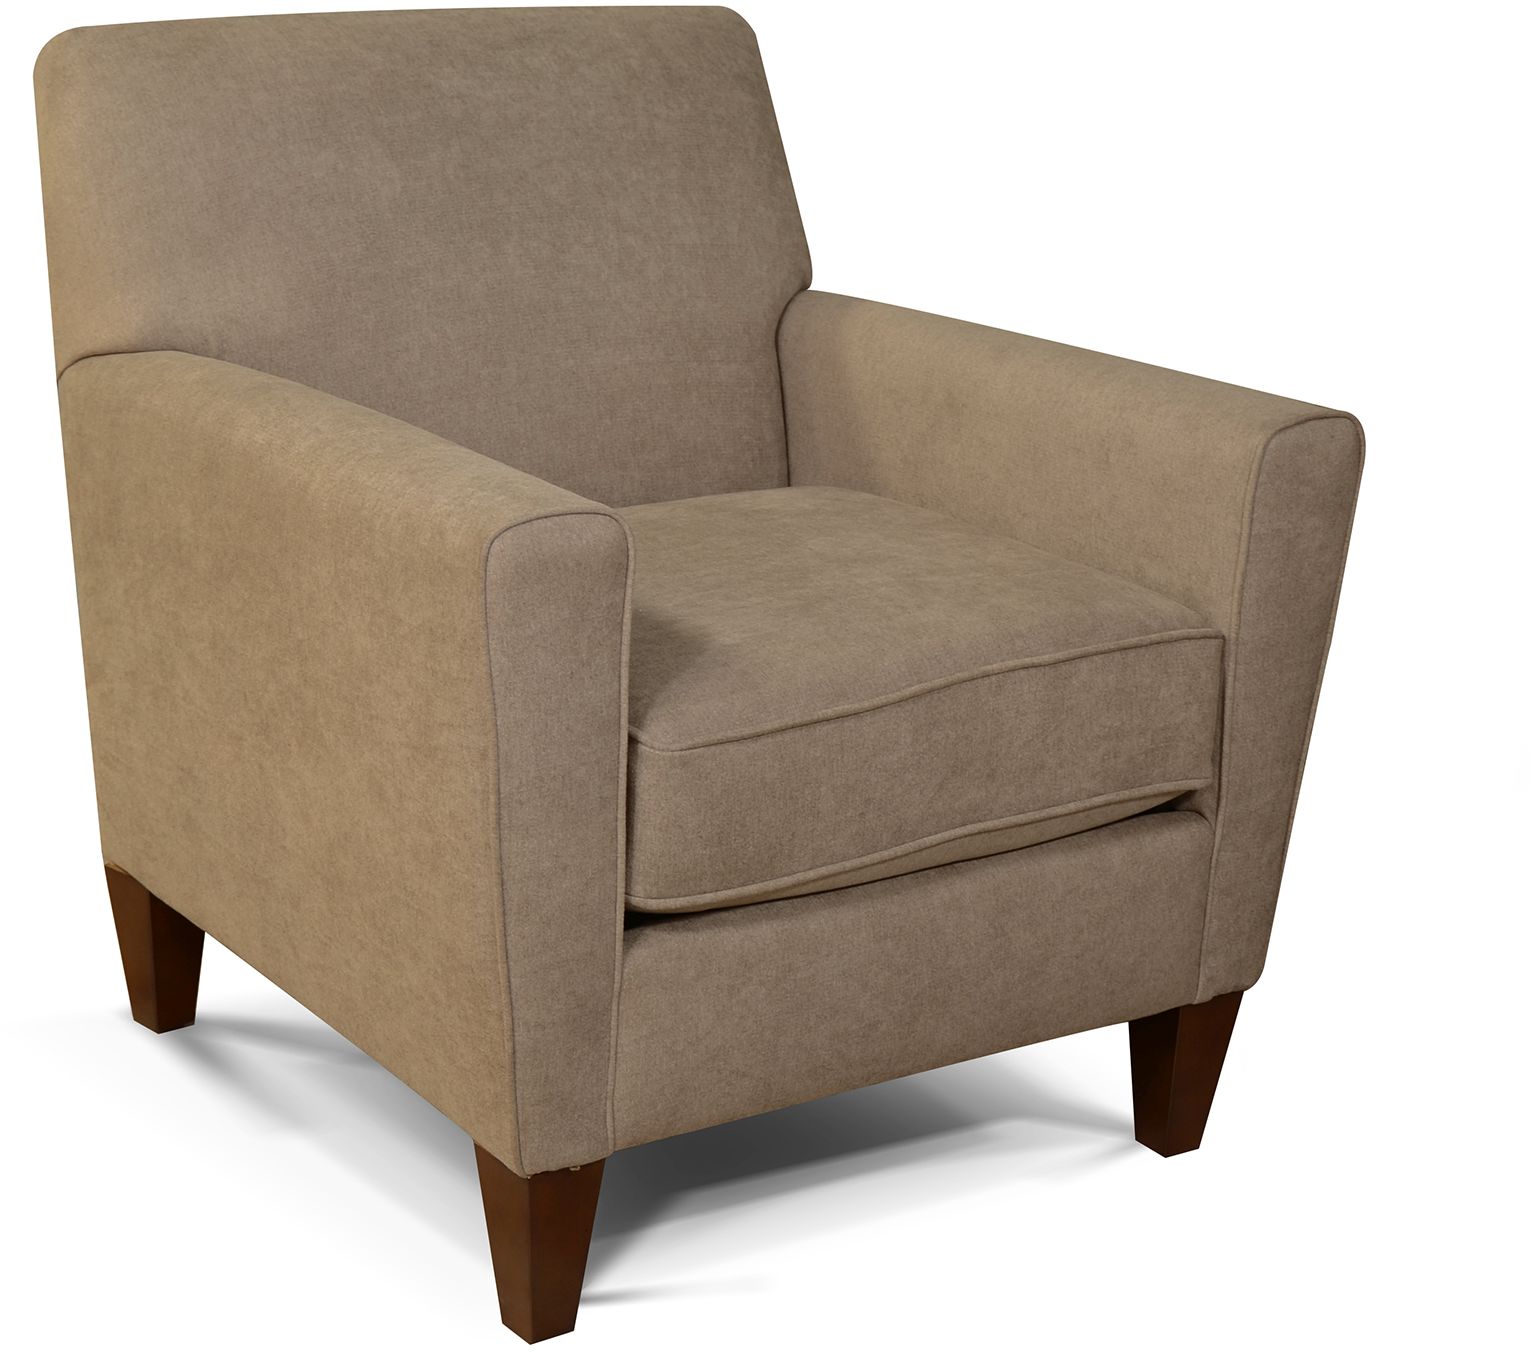 England Furniturellegedale Chair